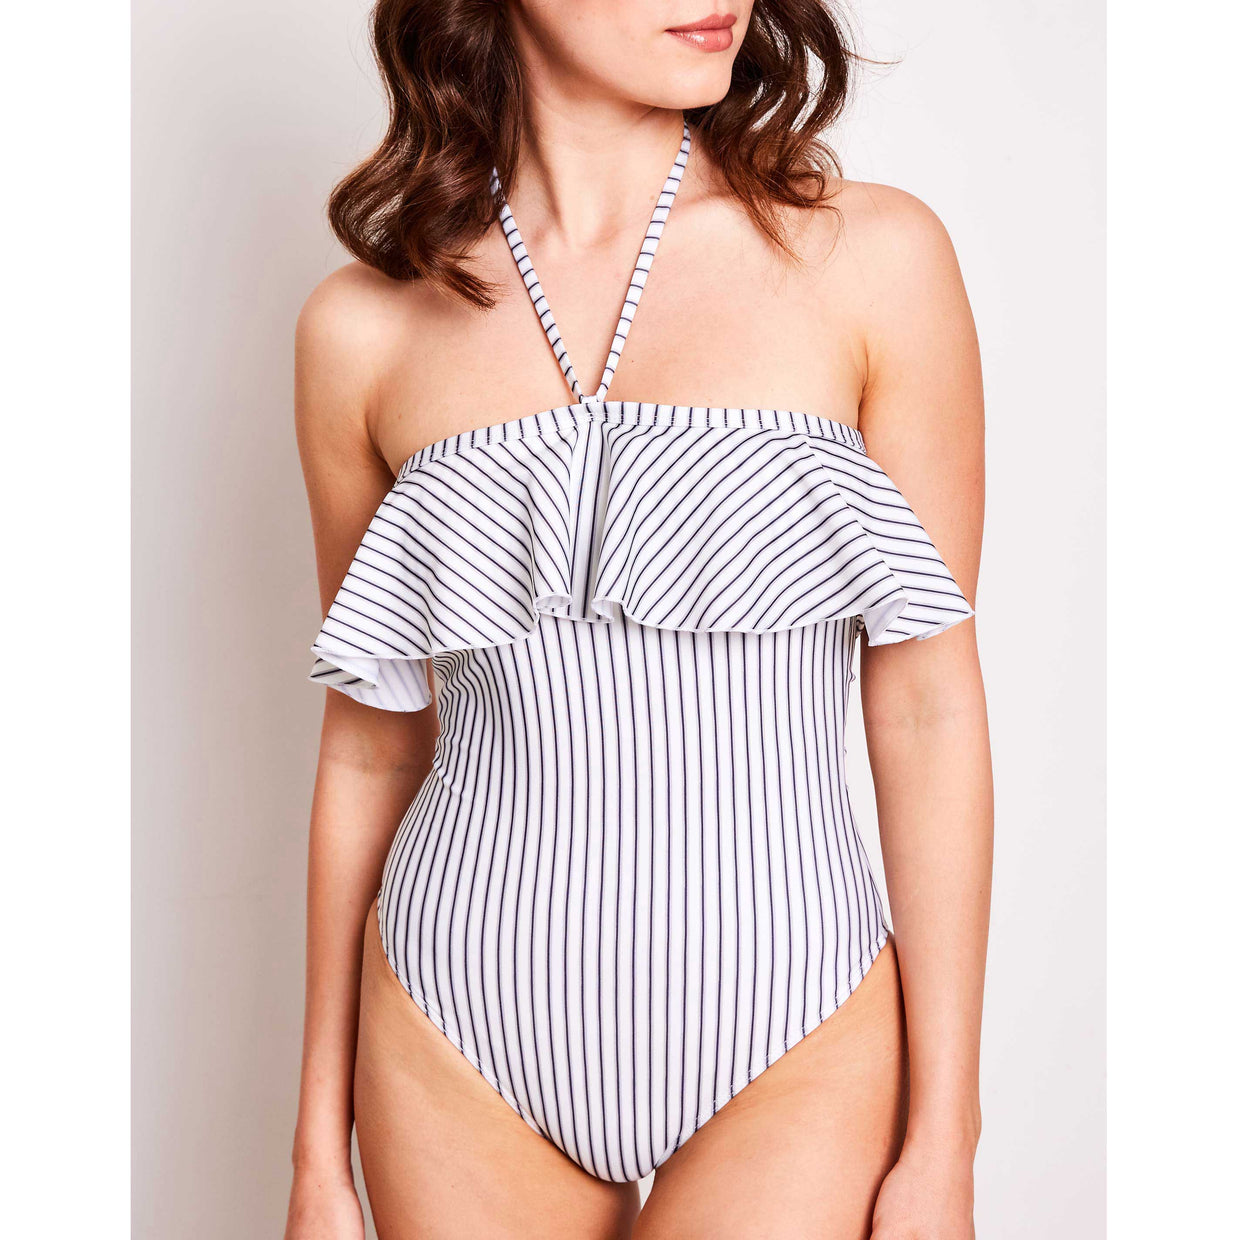 Olivia-one-piece-pinstripes-2-contessa-volpi-summer-swimwear-collection